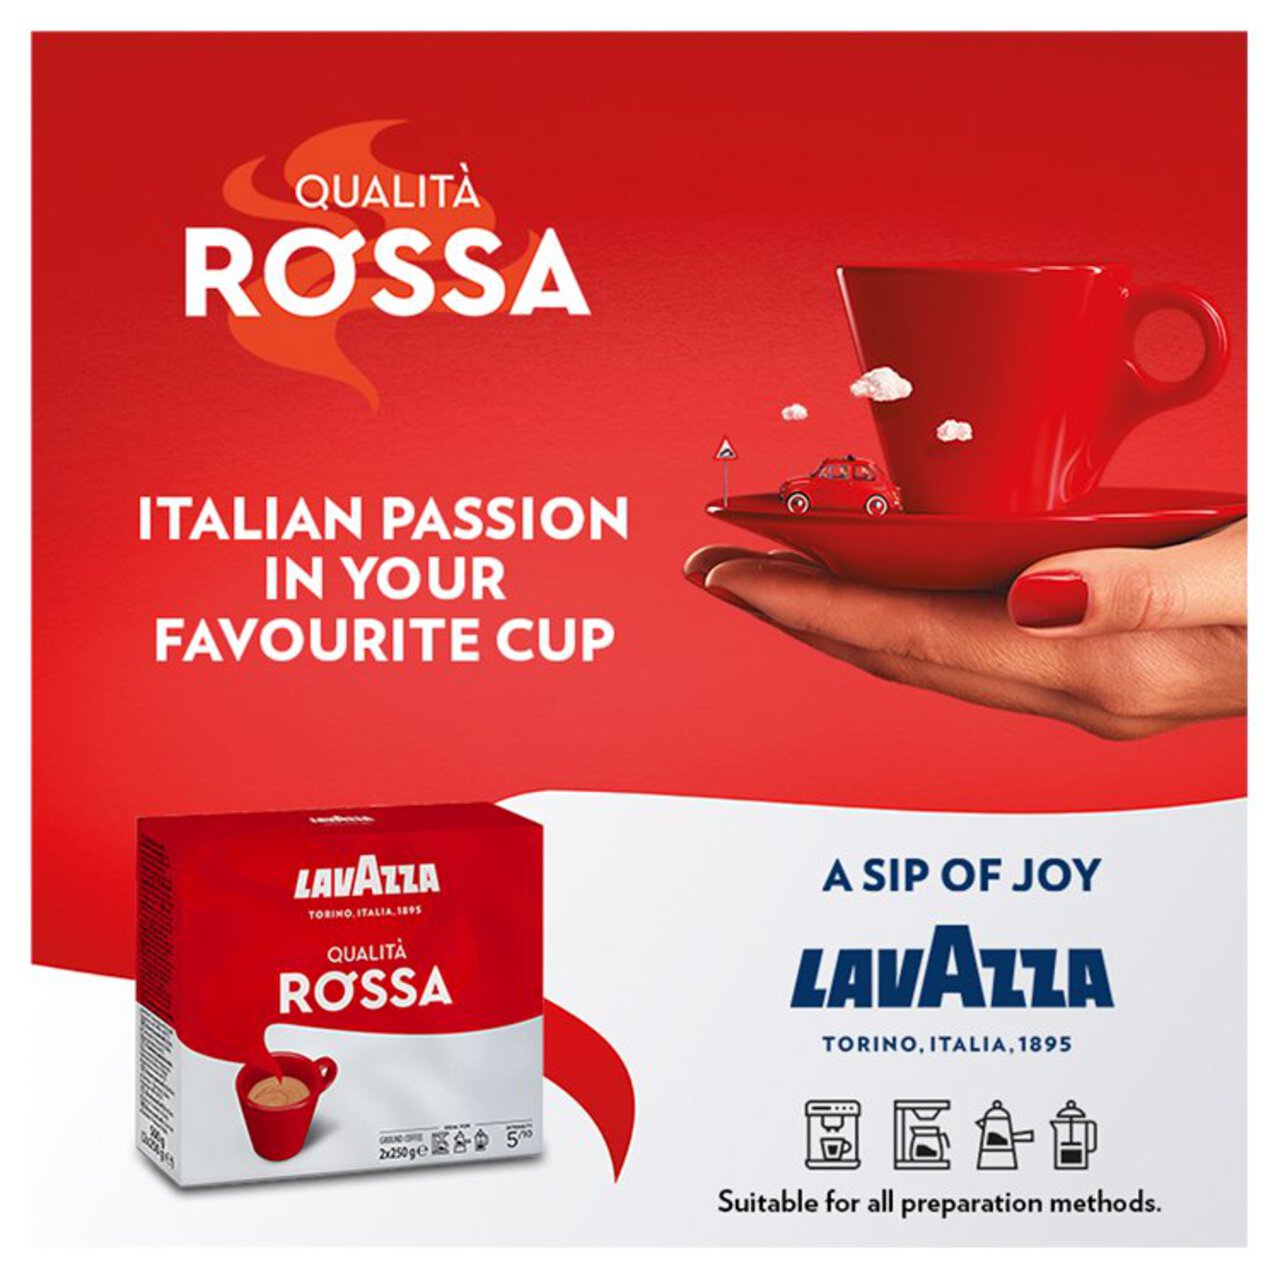 Lavazza Qualita Rossa Ground Coffee 2 x 250g